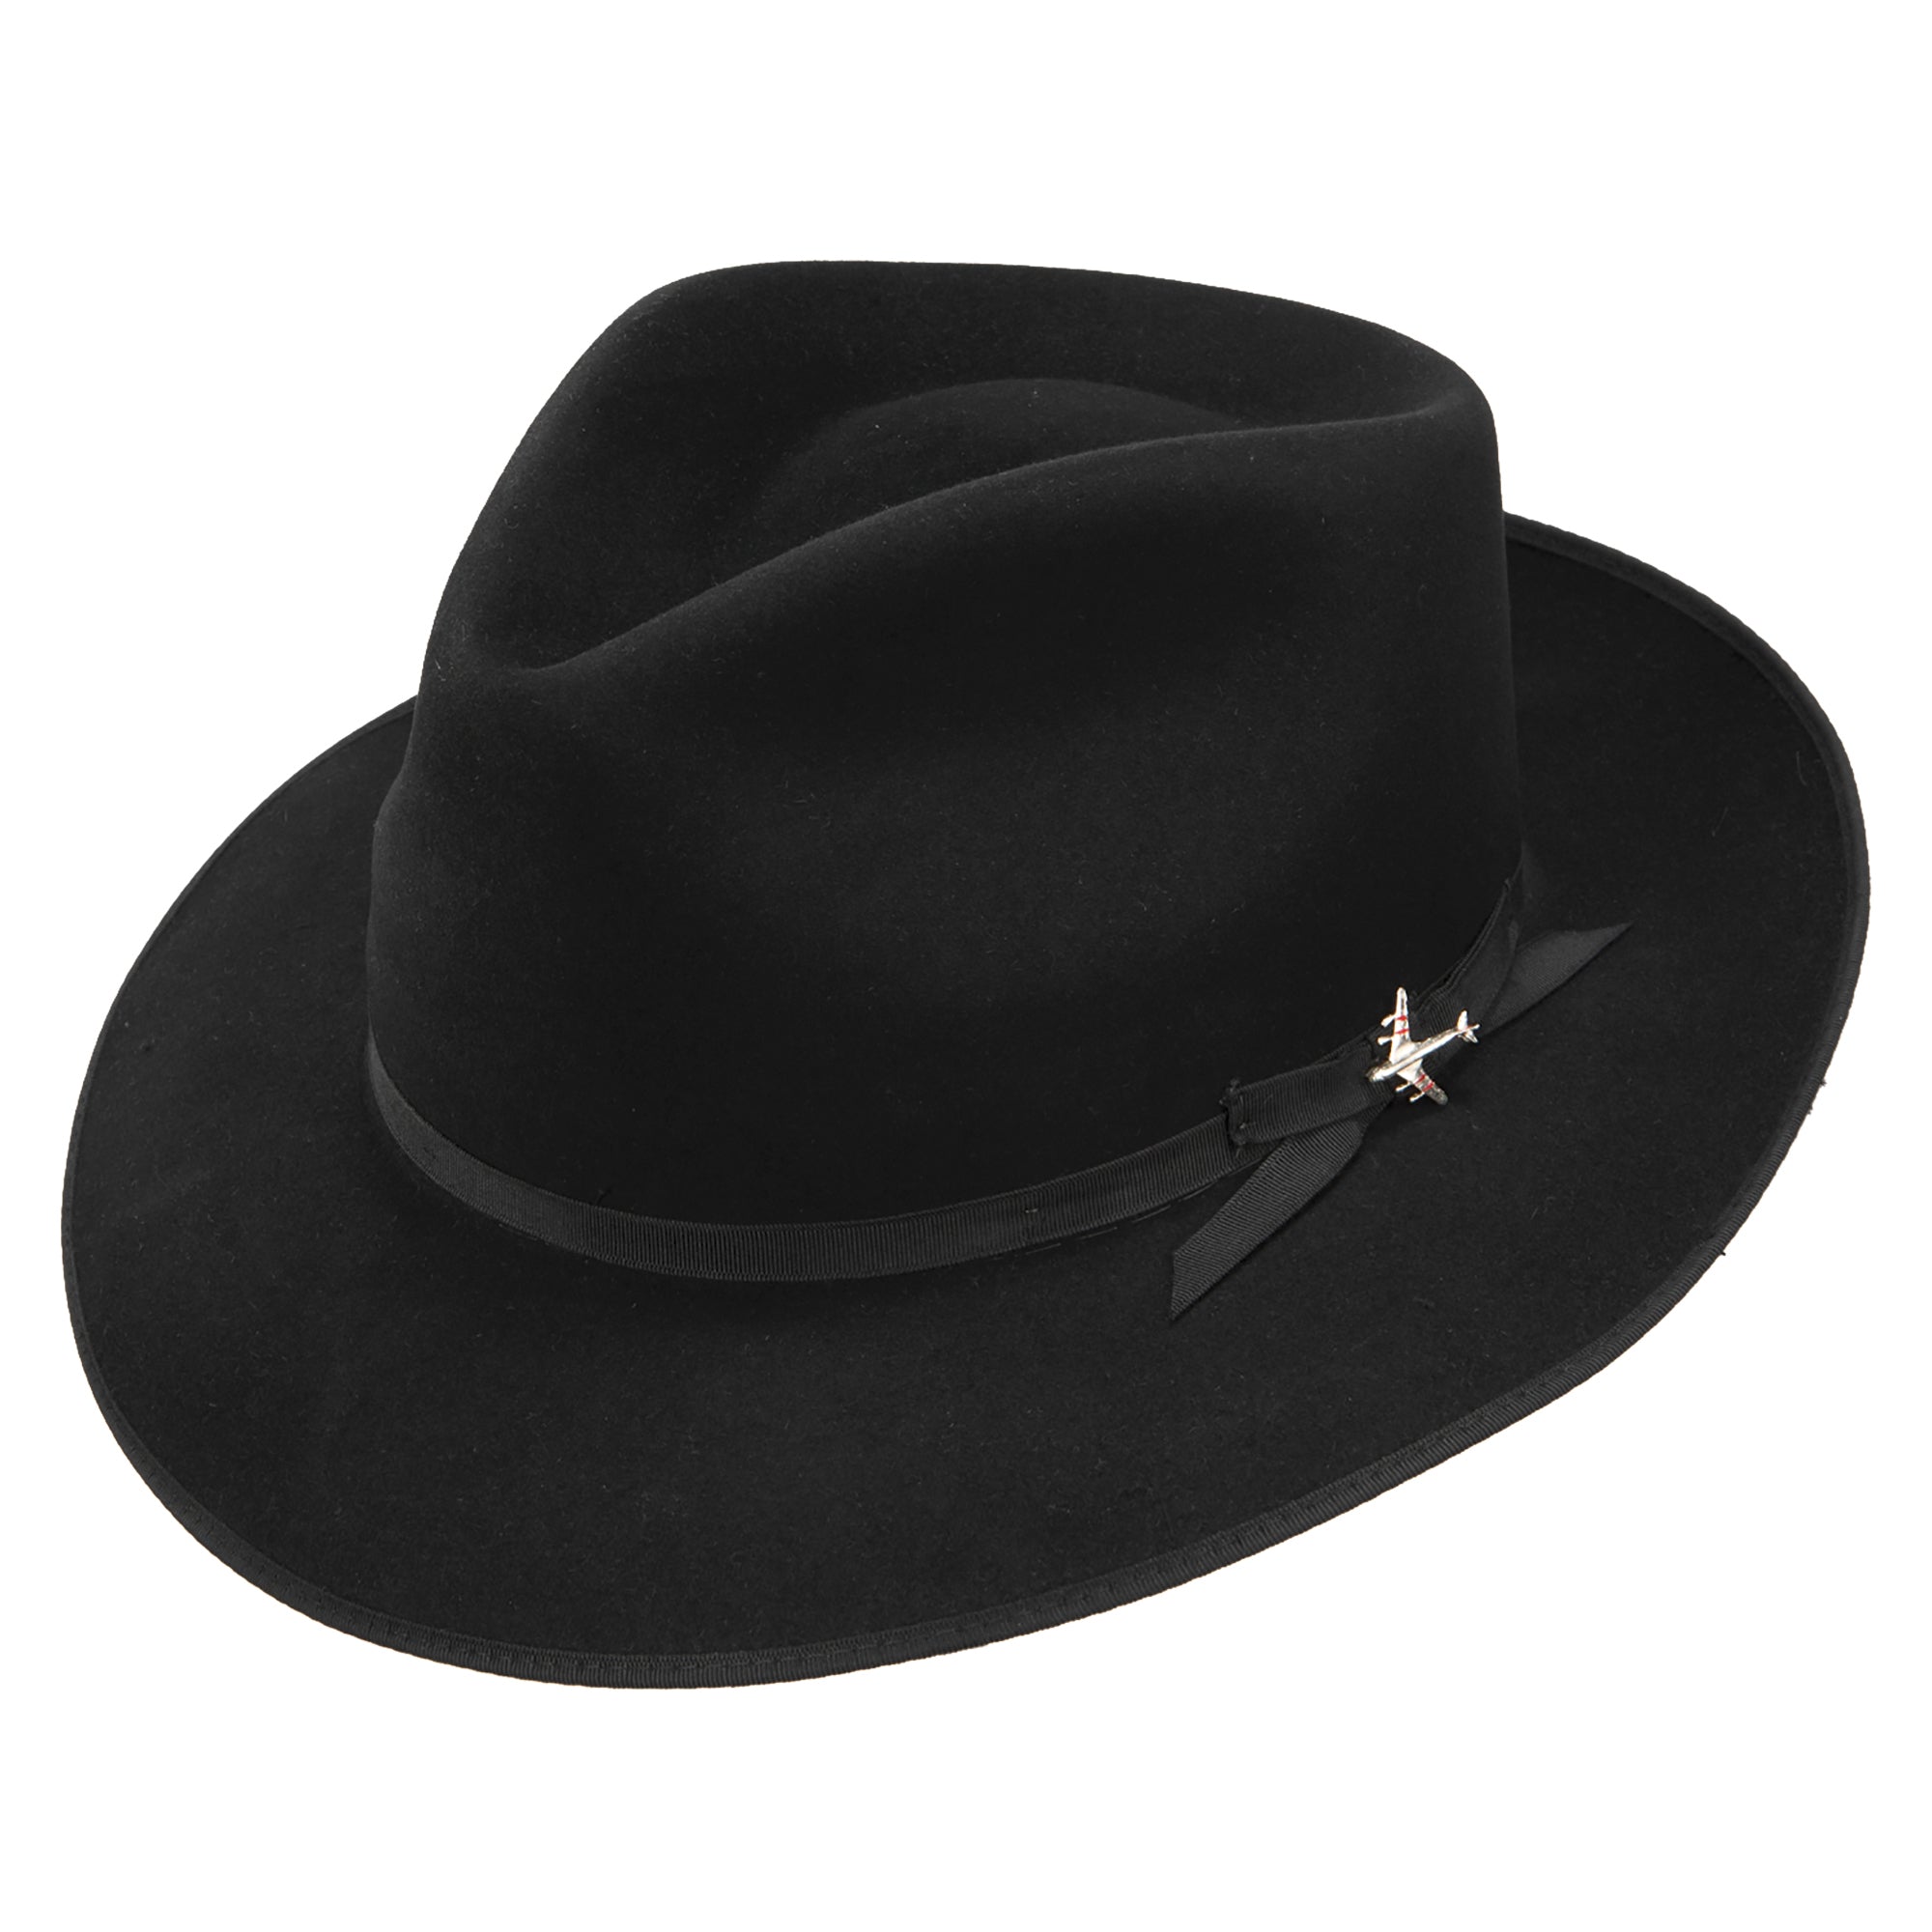 Stetson Stratoliner Fur Felt Fedora Hat with Hat Box